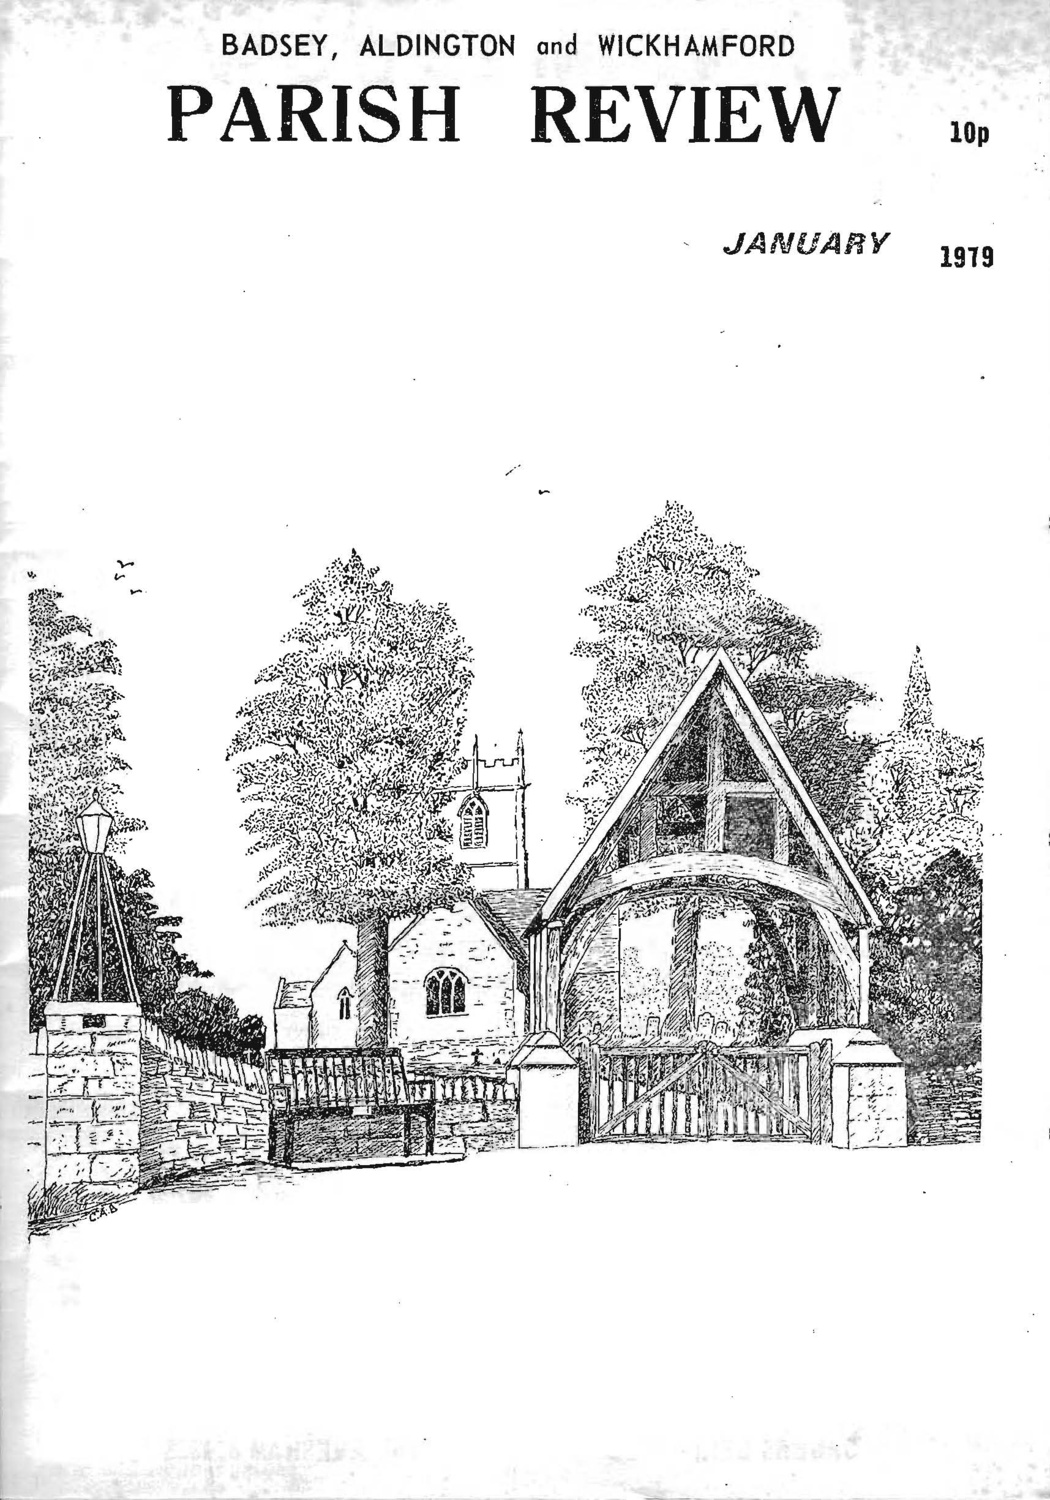 Badsey, Aldington and Wickhamford Parish Review, January 1979